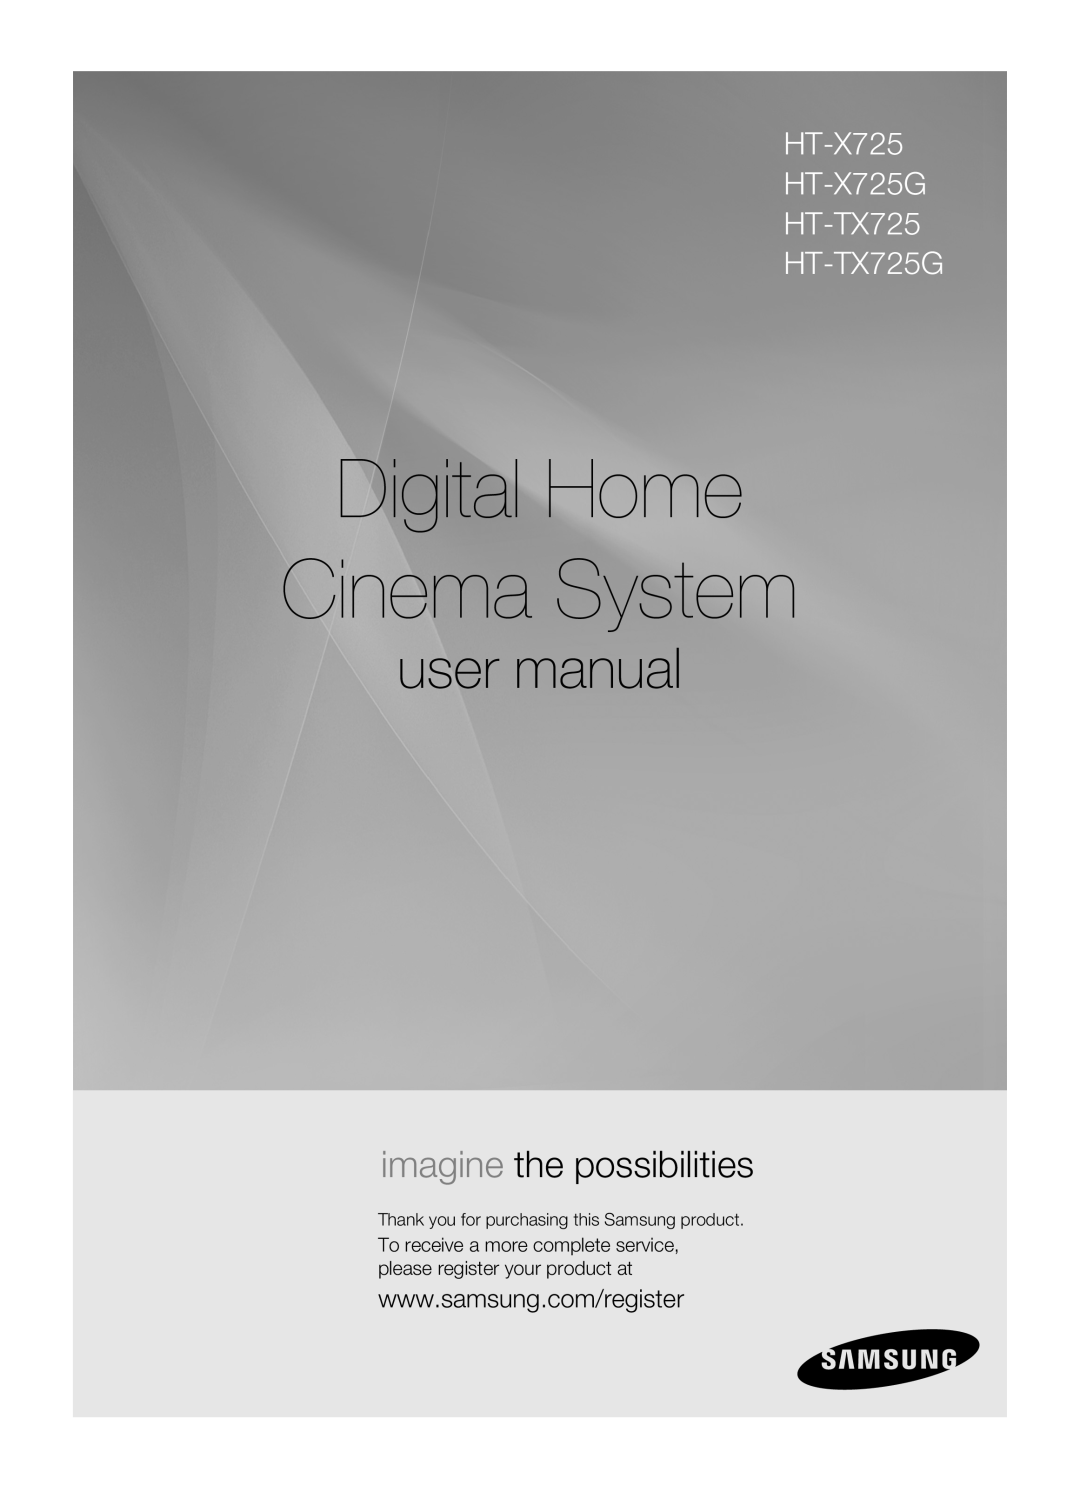 Samsung user manual Digital Home Cinema System, imagine the possibilities, HT-X725 HT-X725G HT-TX725 HT-TX725G 